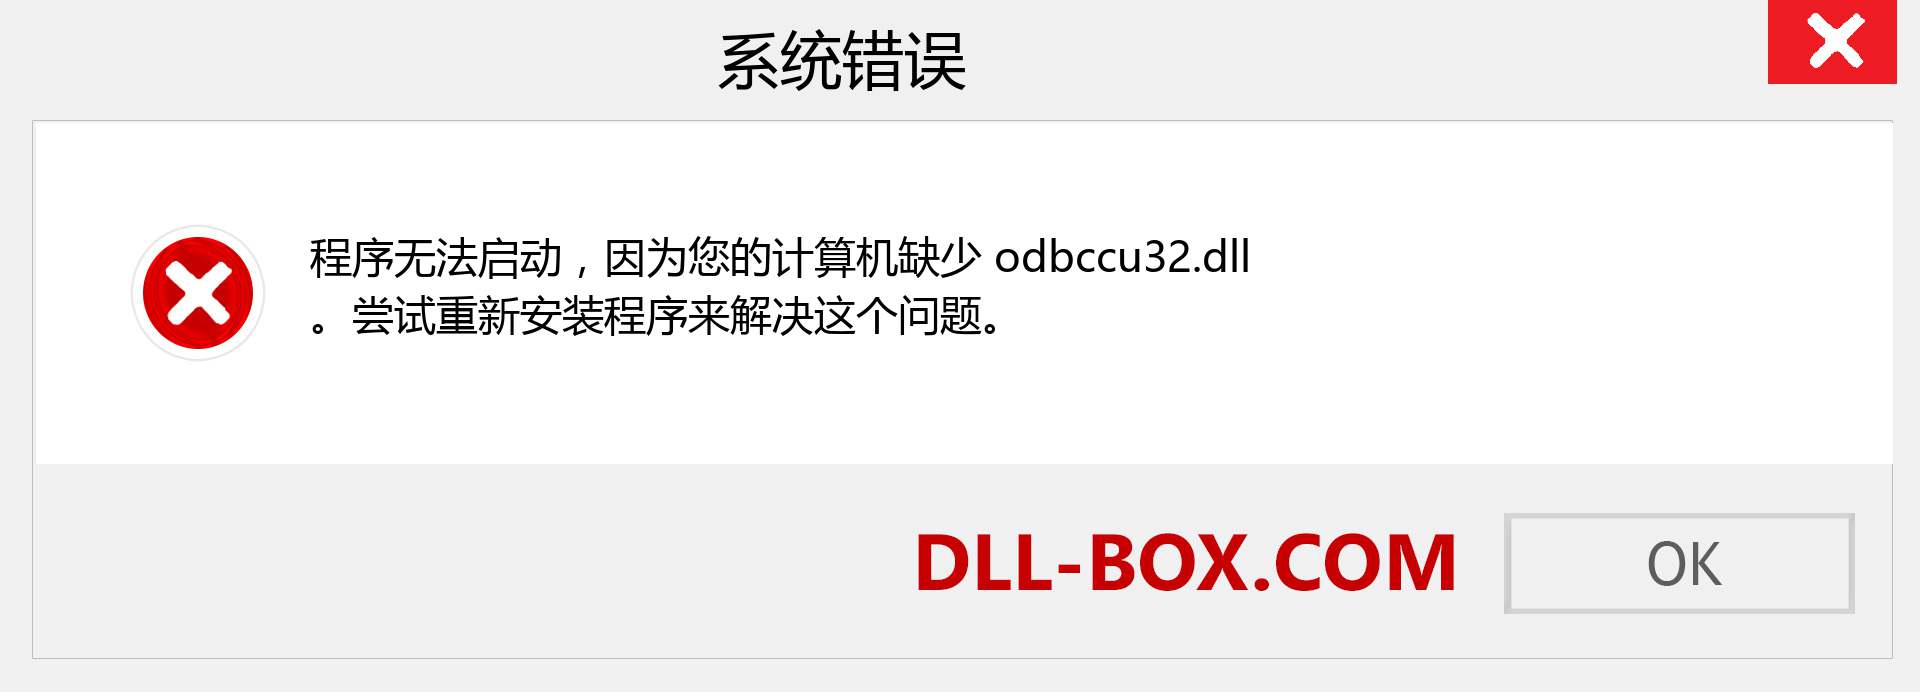 odbccu32.dll 文件丢失？。 适用于 Windows 7、8、10 的下载 - 修复 Windows、照片、图像上的 odbccu32 dll 丢失错误